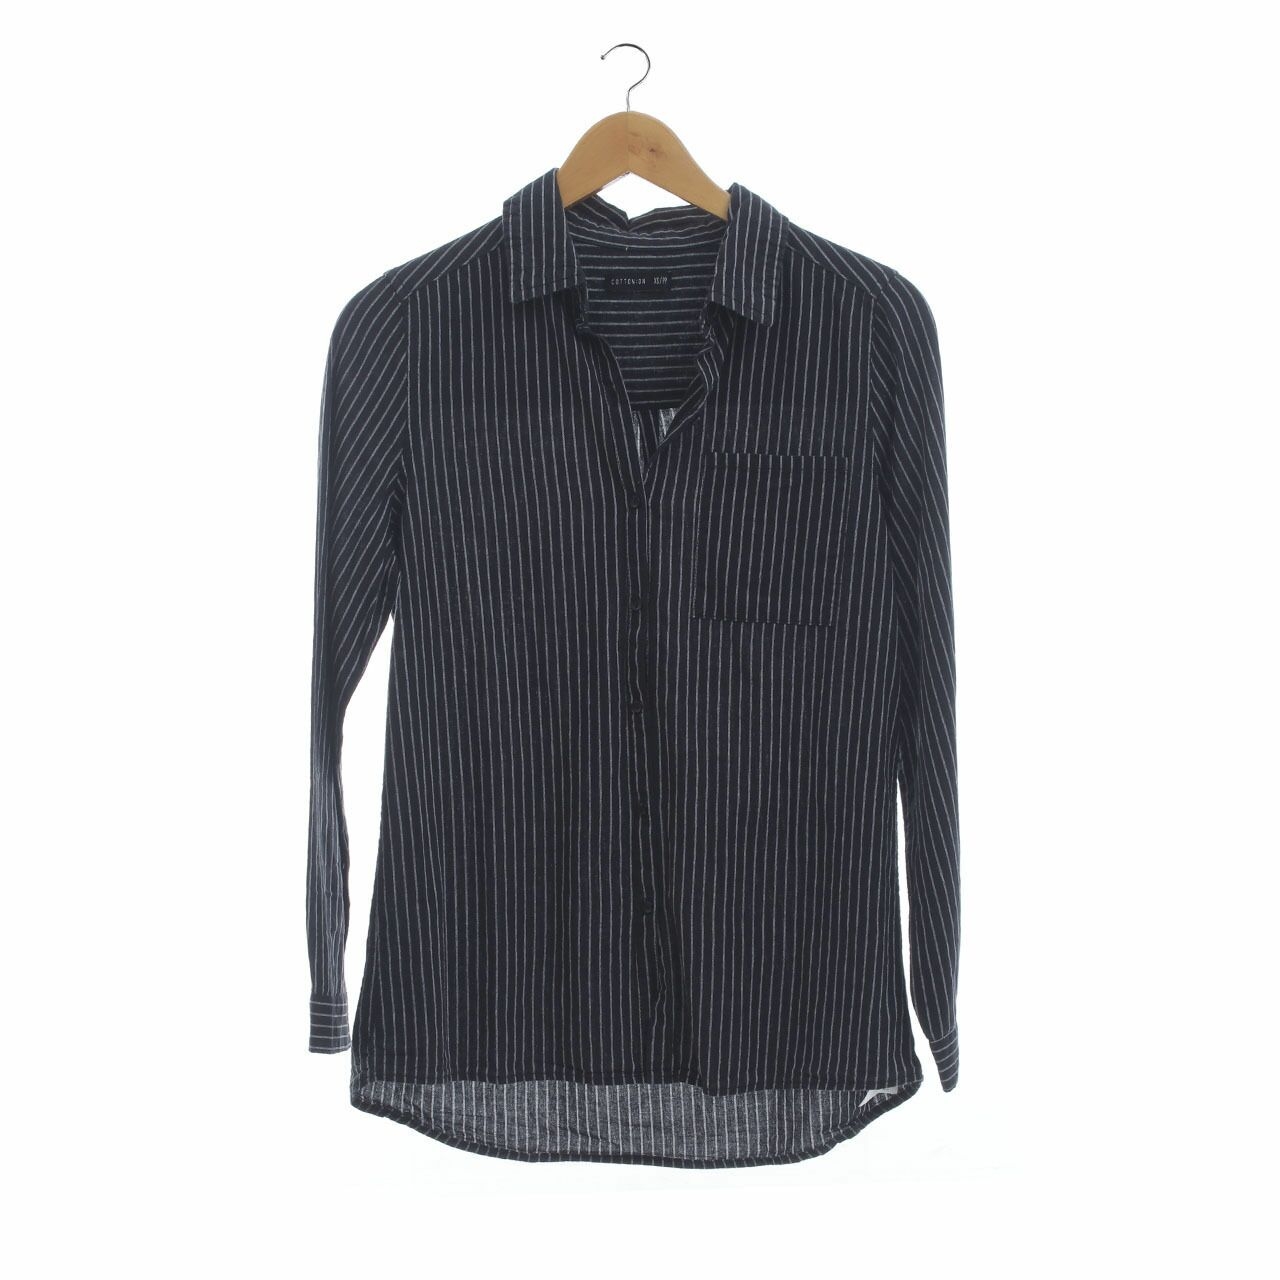 Cotton On Black Stripes Pocket Shirt